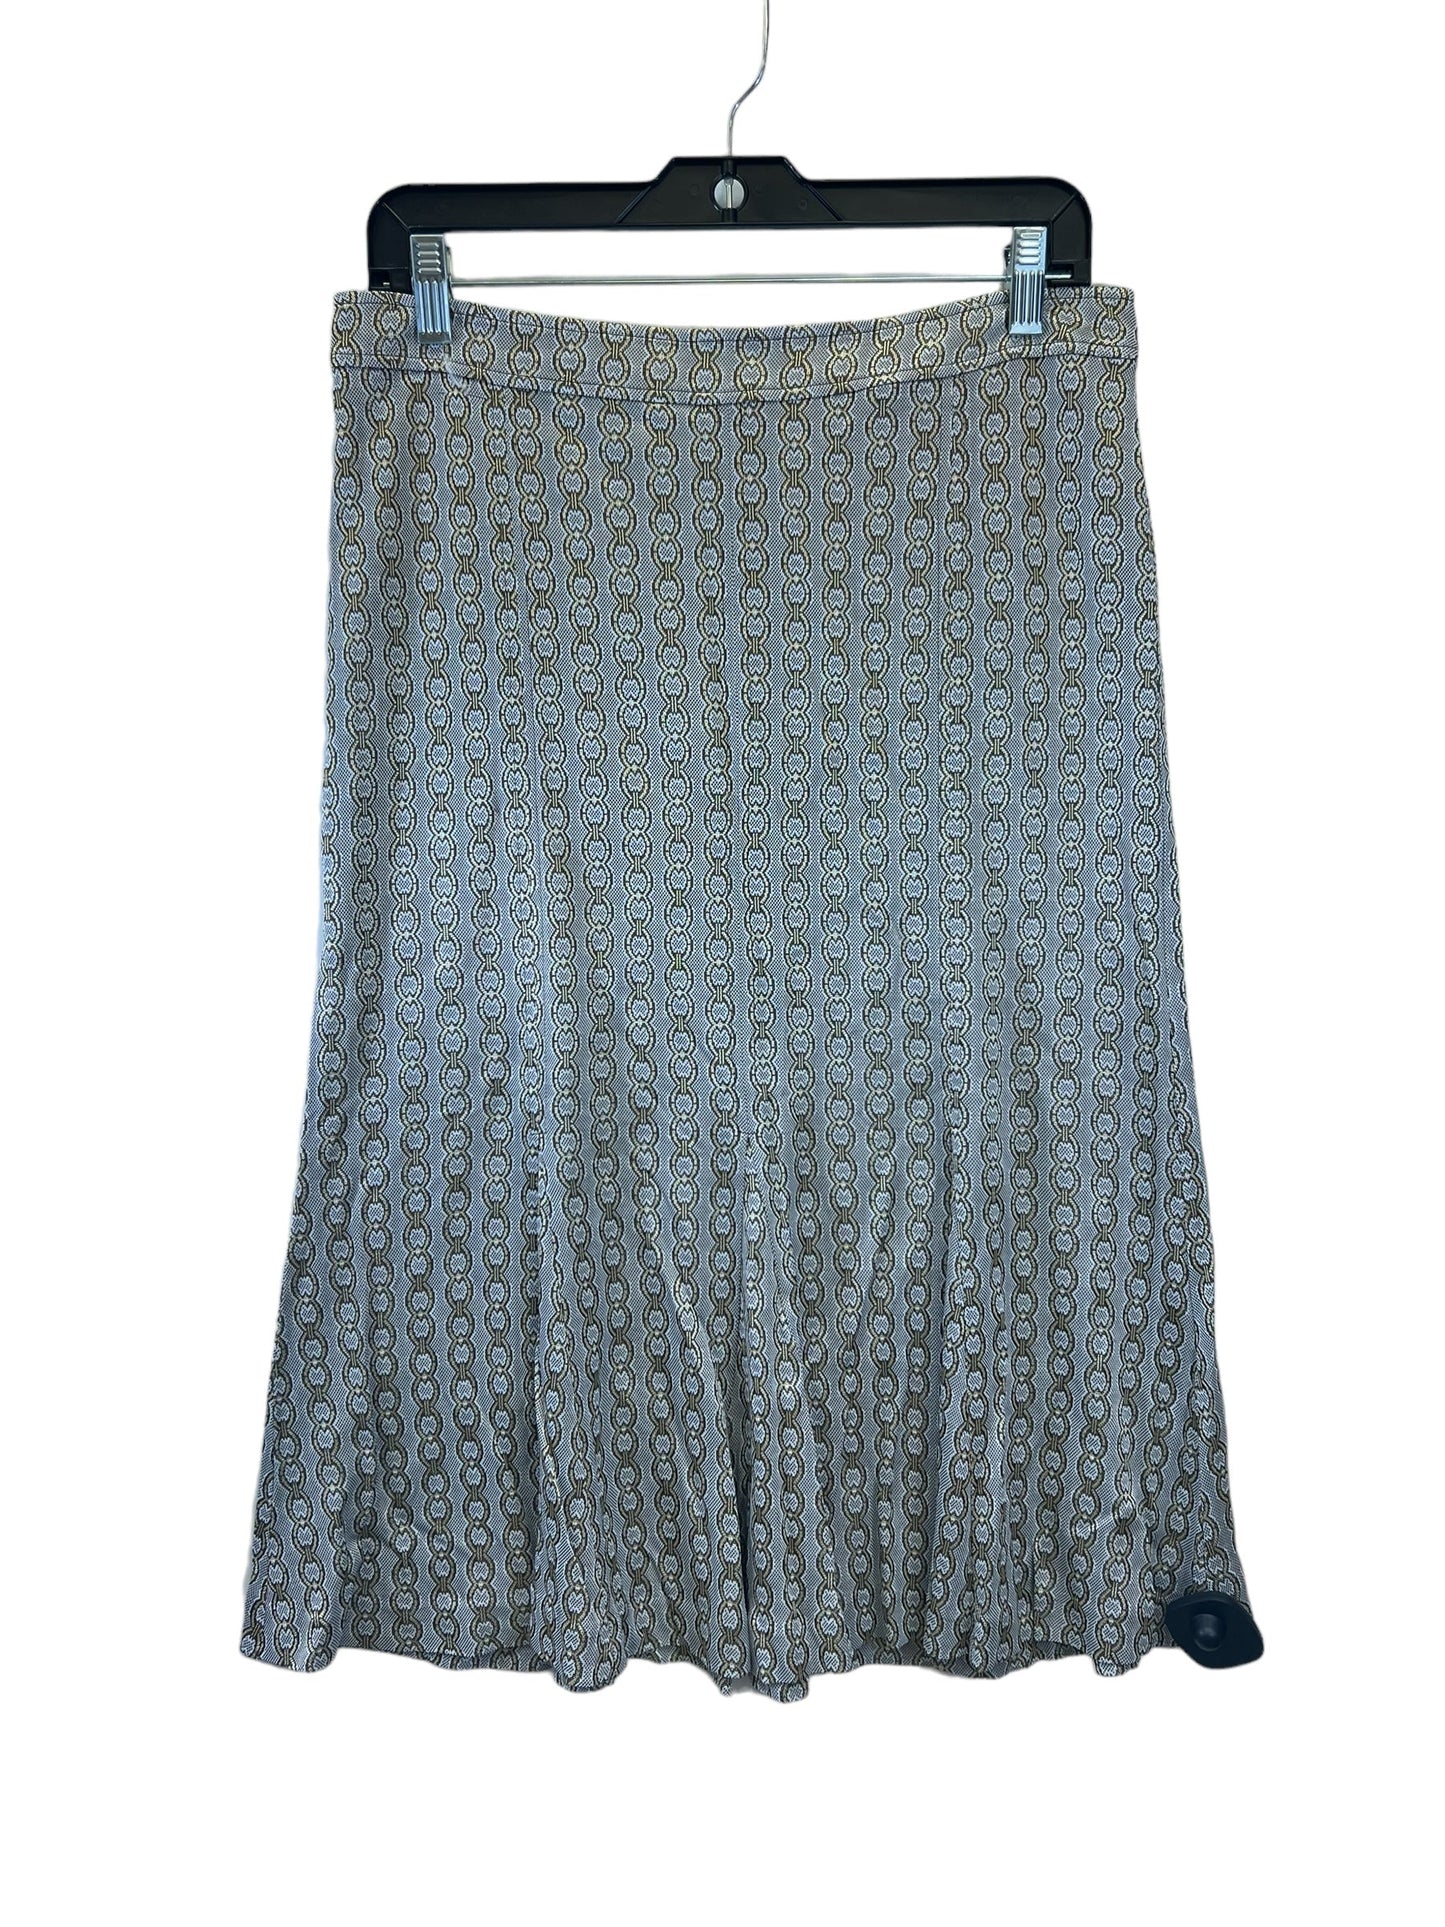 Skirt Midi By Tory Burch  Size: M